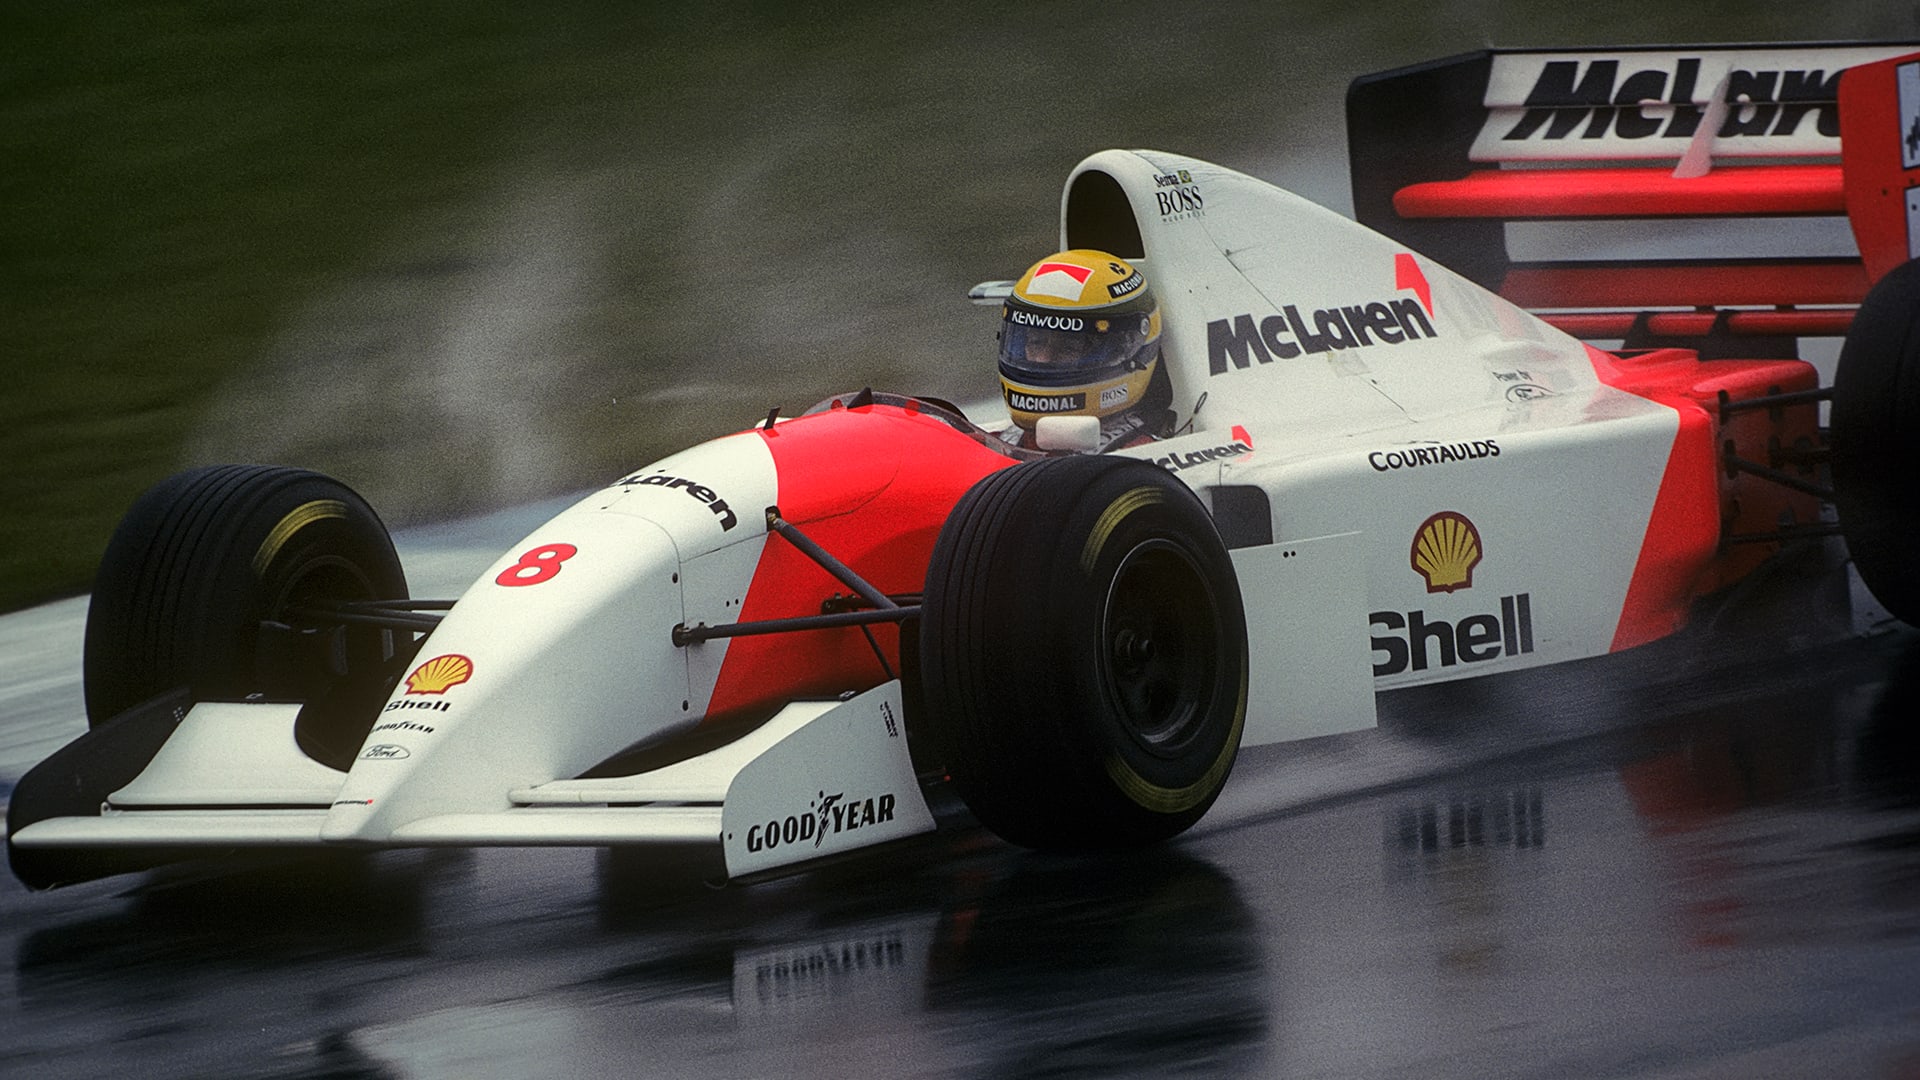 Ayrton Senna (Formula 1 Driver) - On This Day